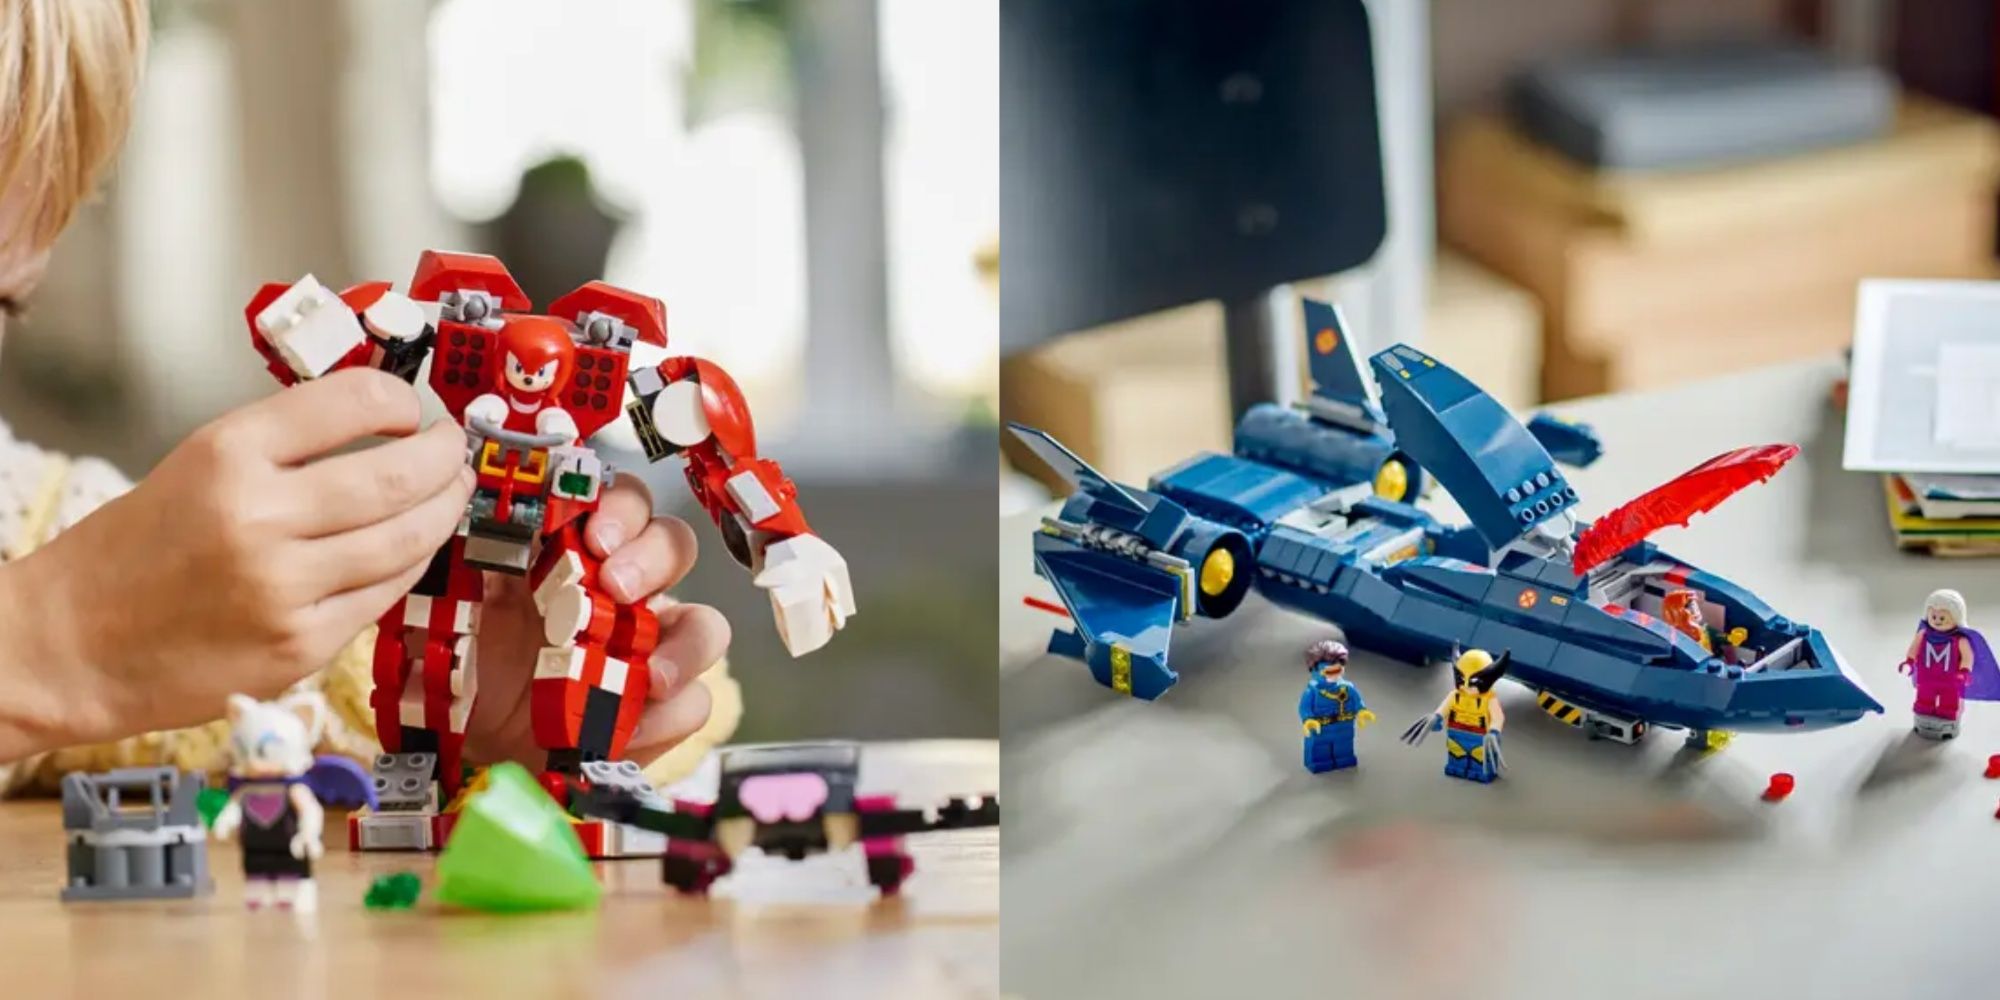 knuckles guardian sonic lego set, and x-men x-jet lego set